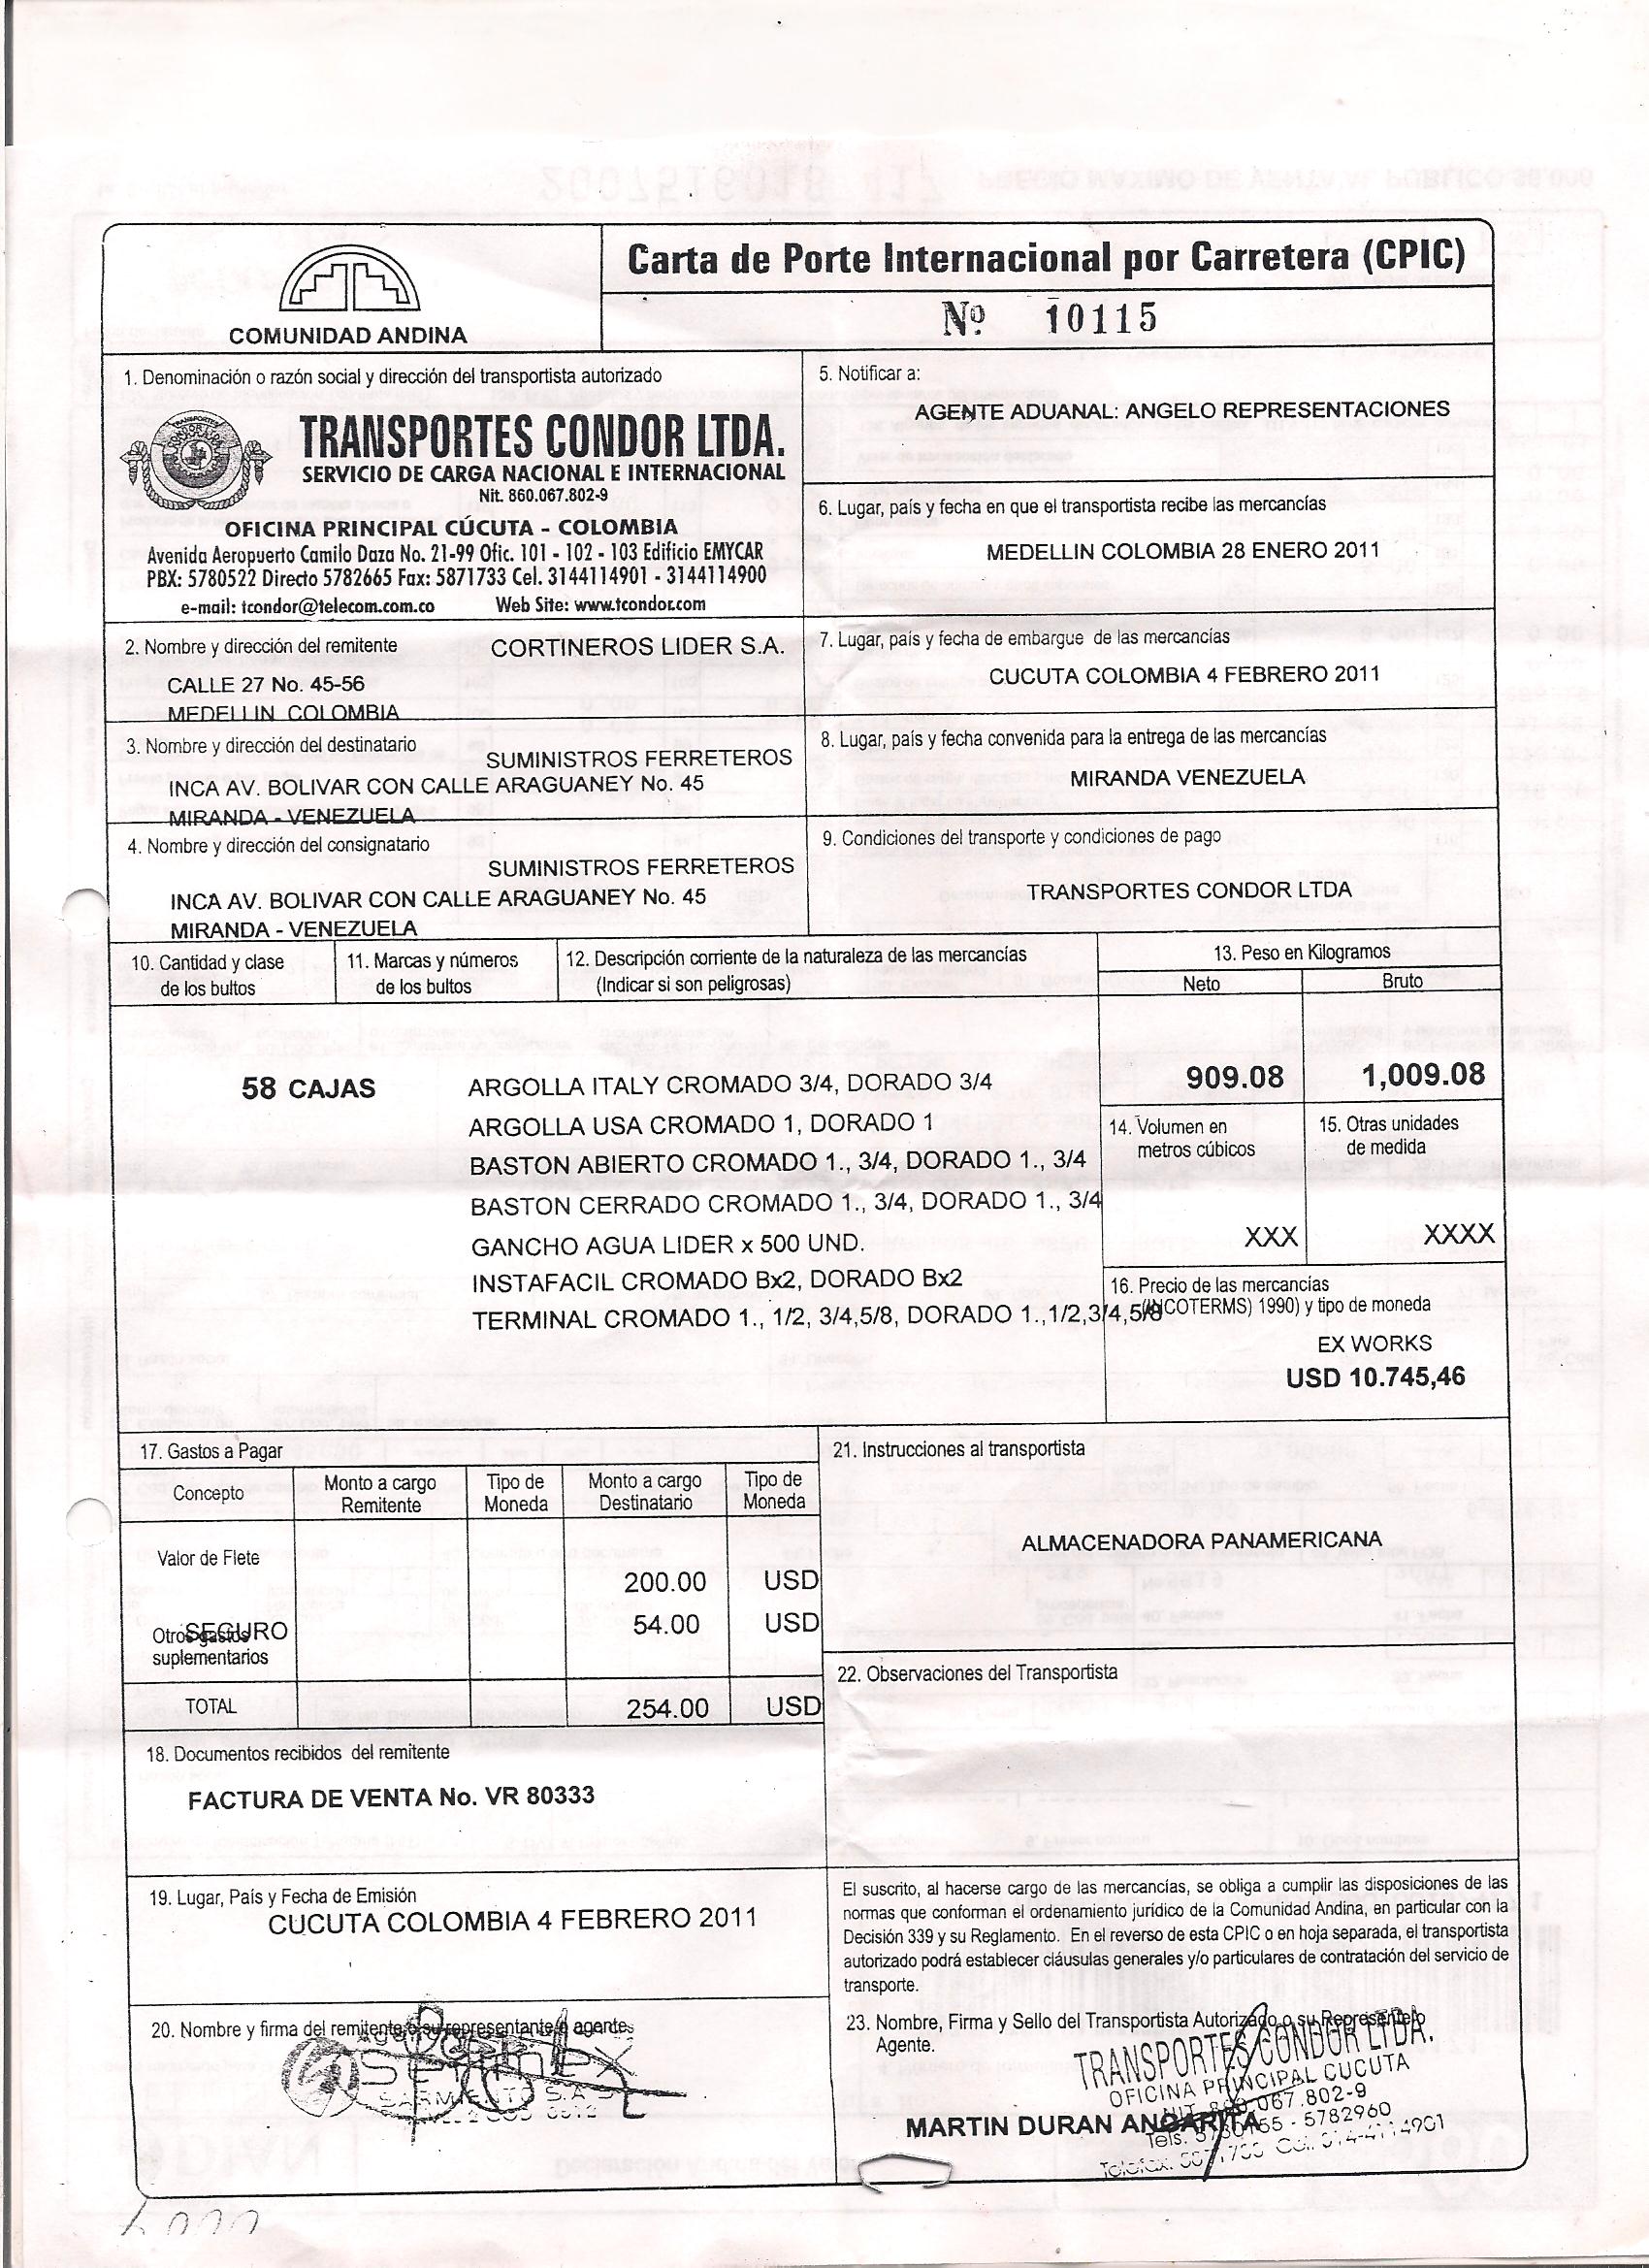 Carta De Instrucciones Al Agente Aduanal - Sample Site l